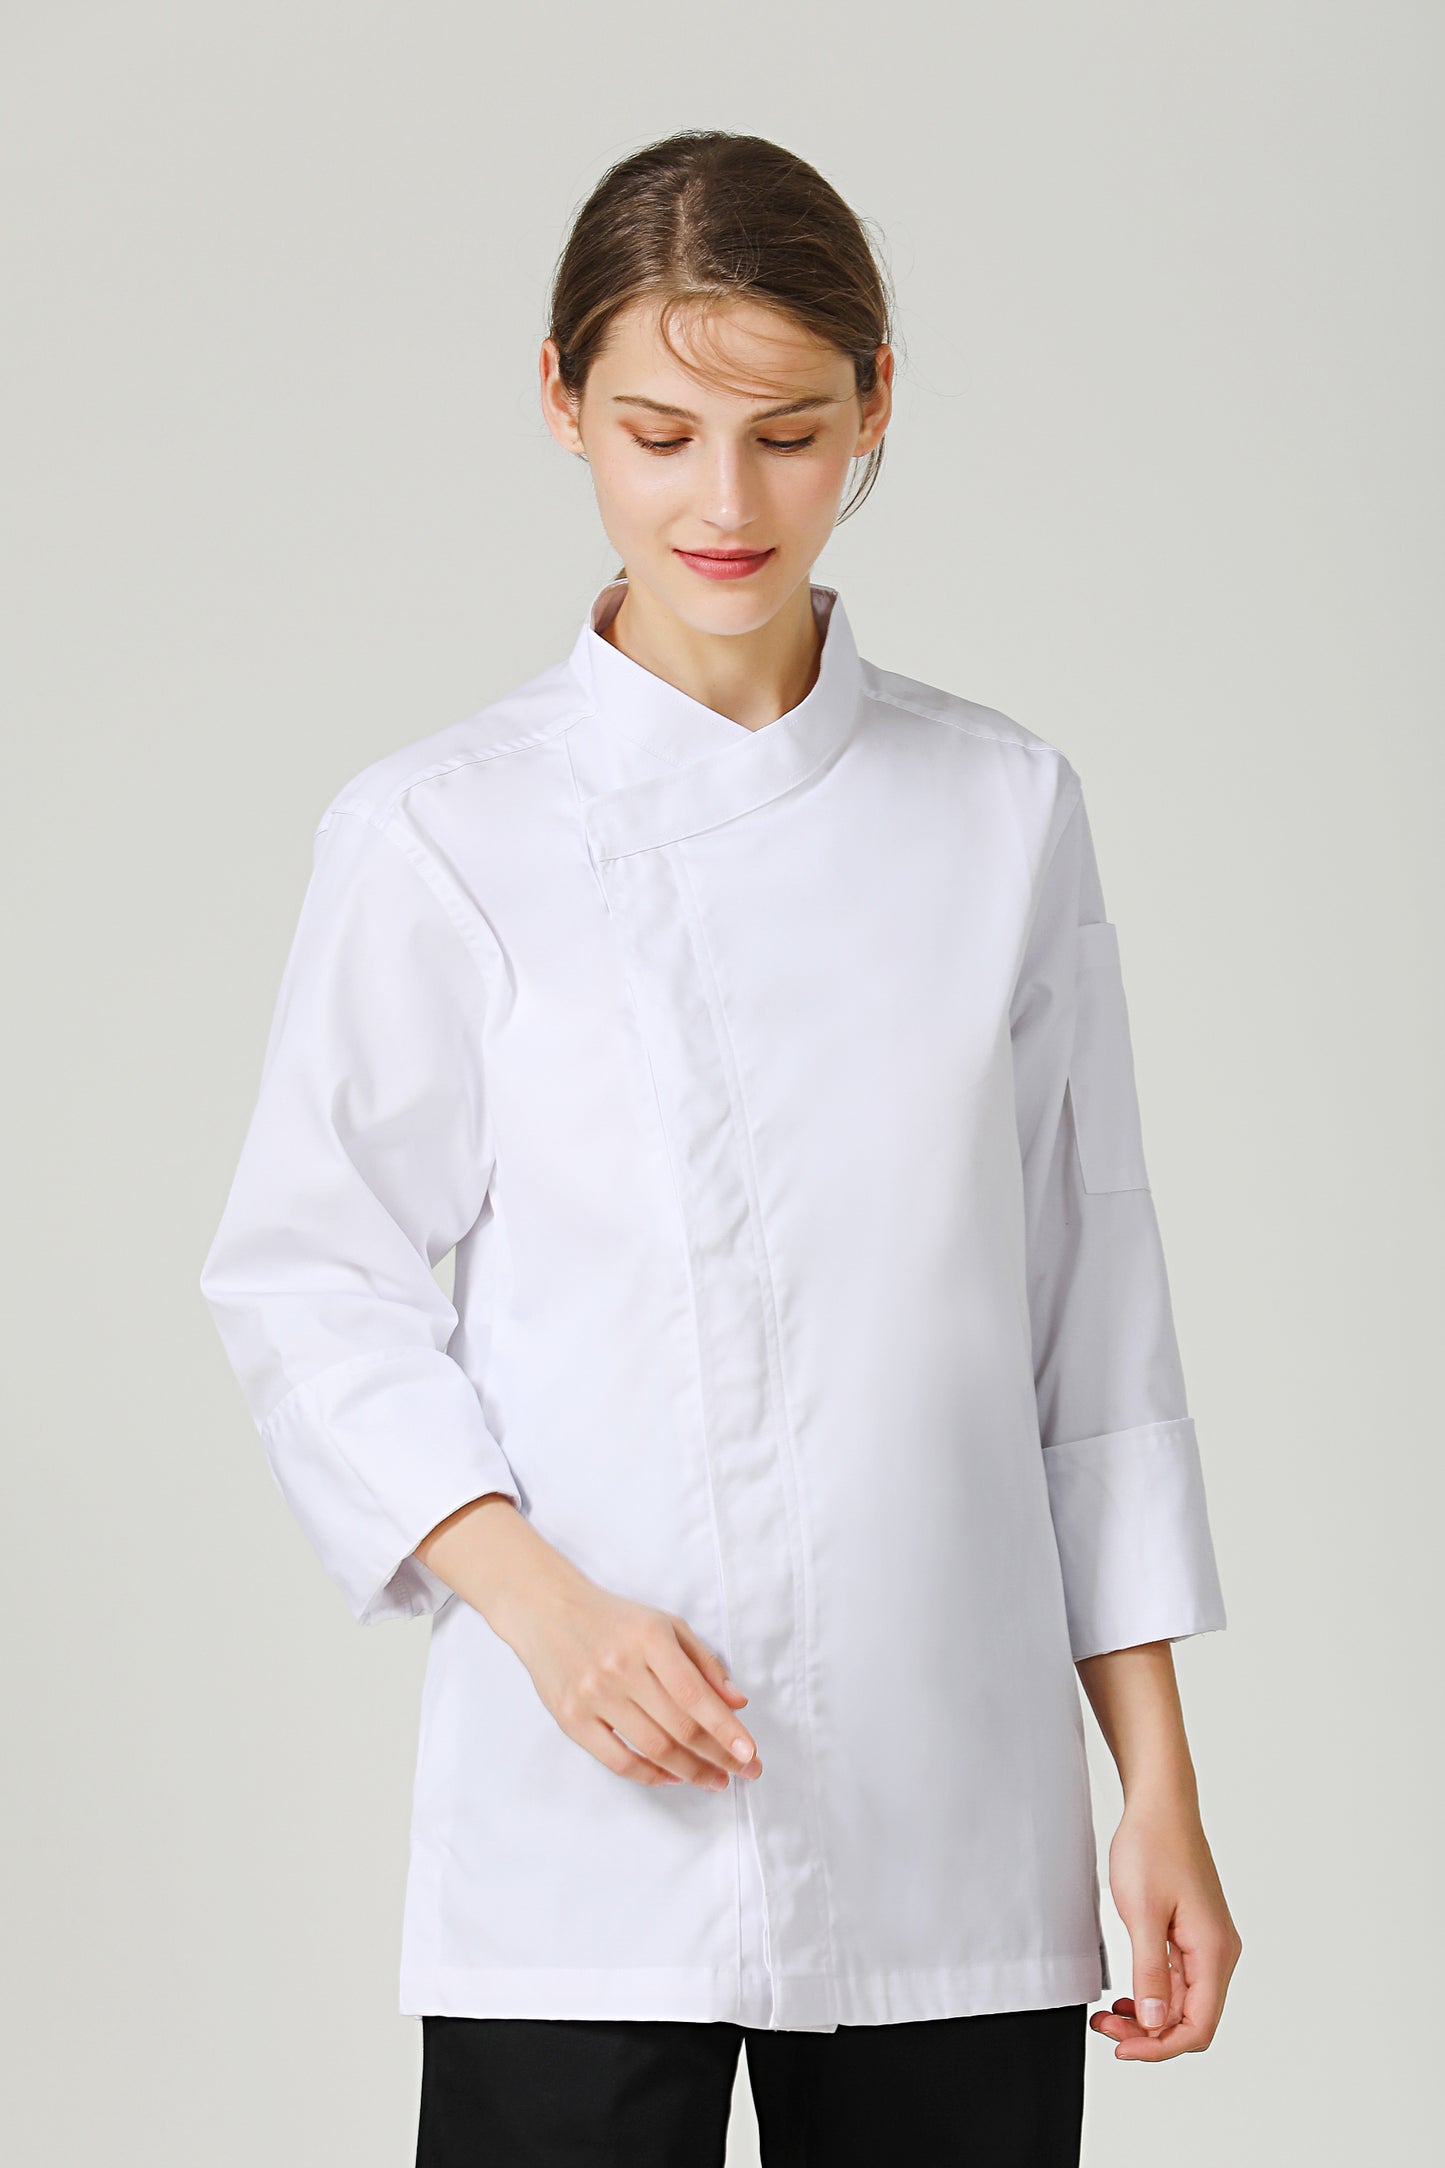 Thyme White Chef Jacket, Long Sleeve